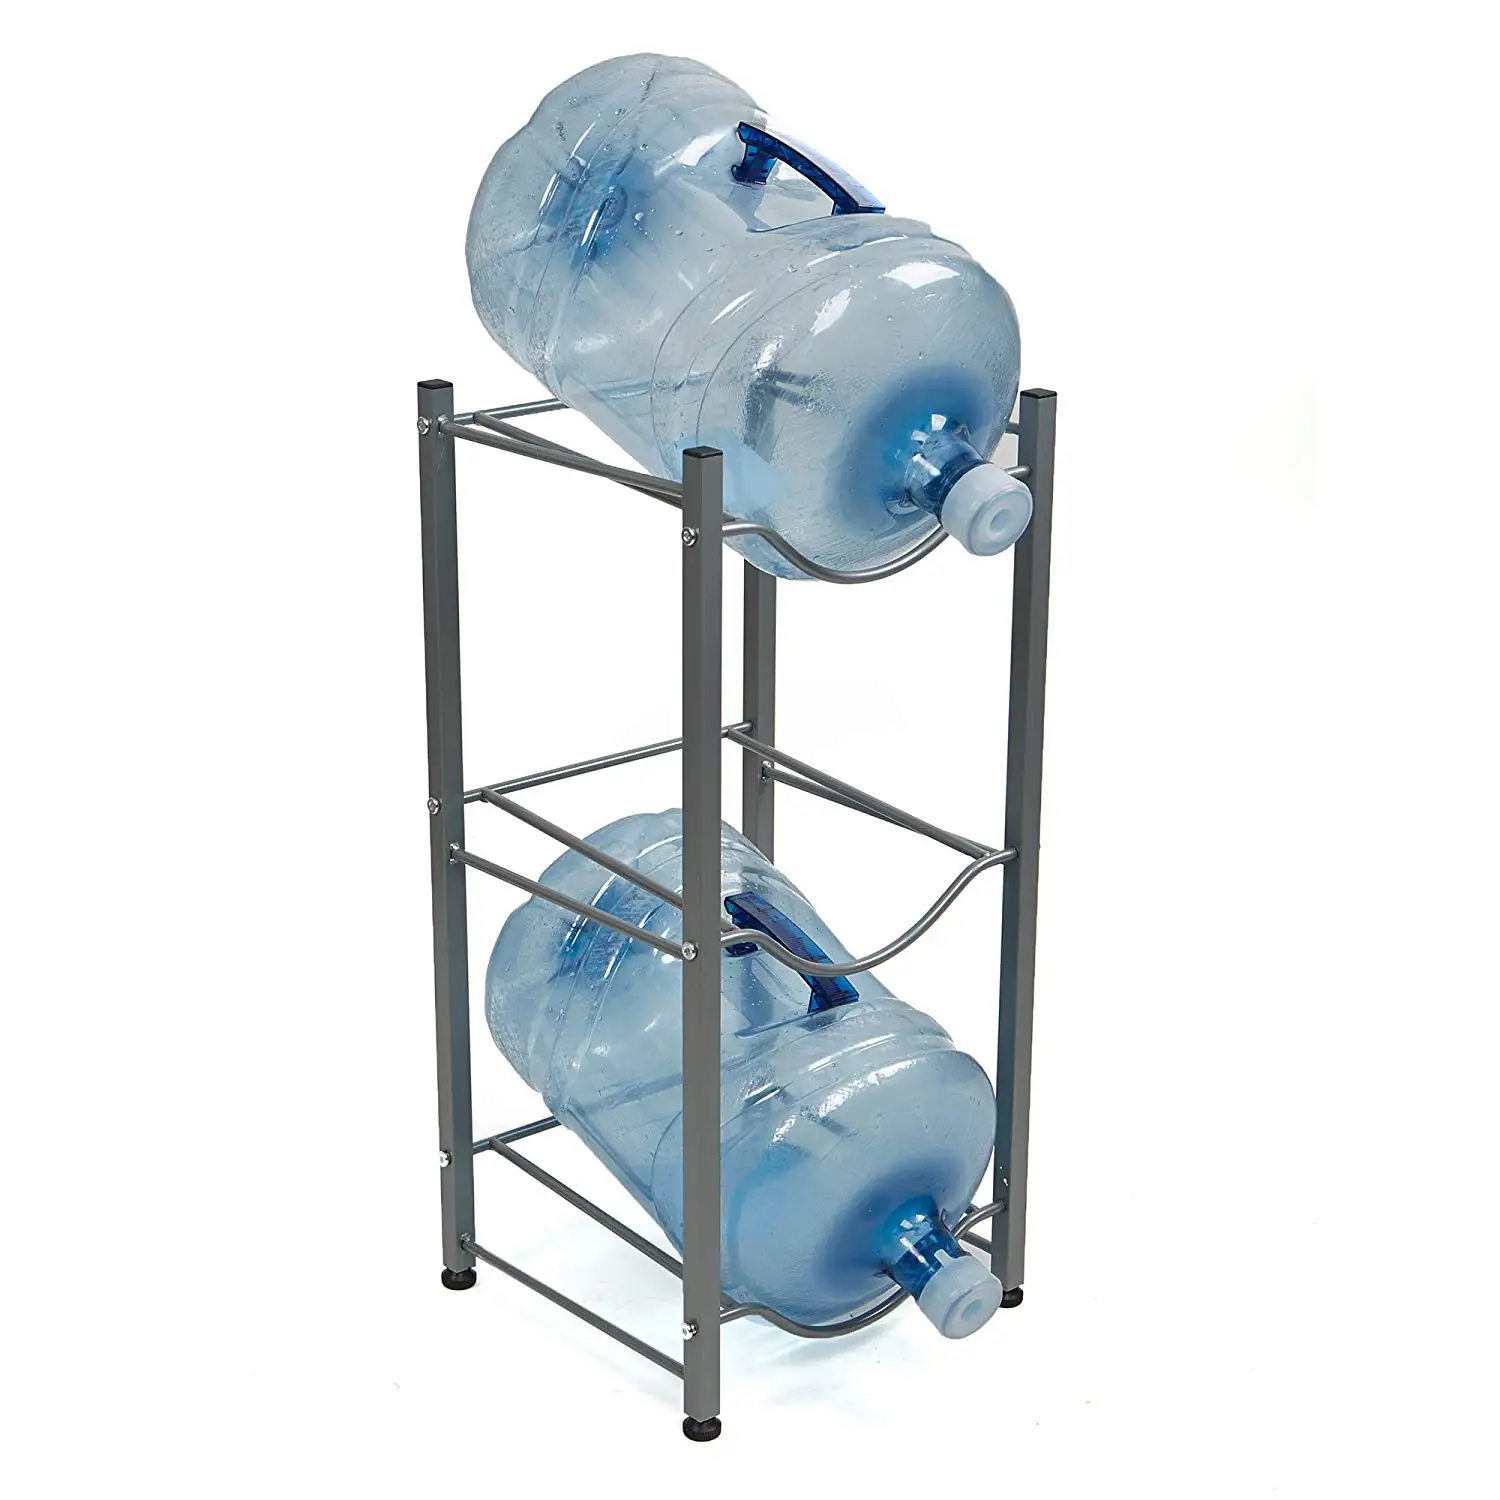 Good quality cheap metal 3-Tier Water Bottle Holder Cooler Jug Rack Water B...